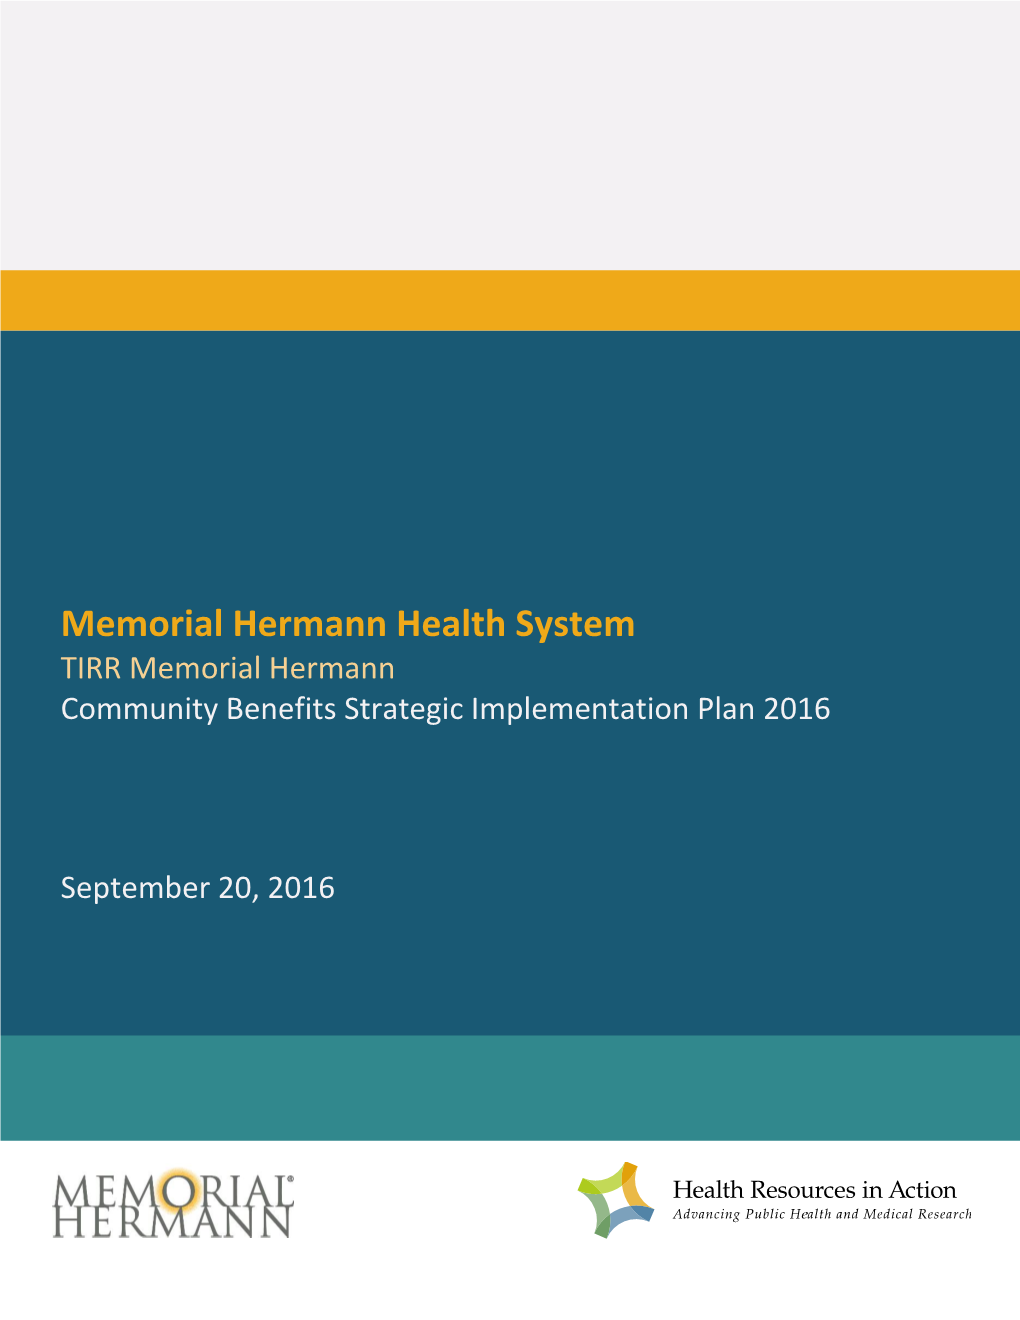 Memorial Hermann Health System TIRR Memorial Hermann Community Benefits Strategic Implementation Plan 2016